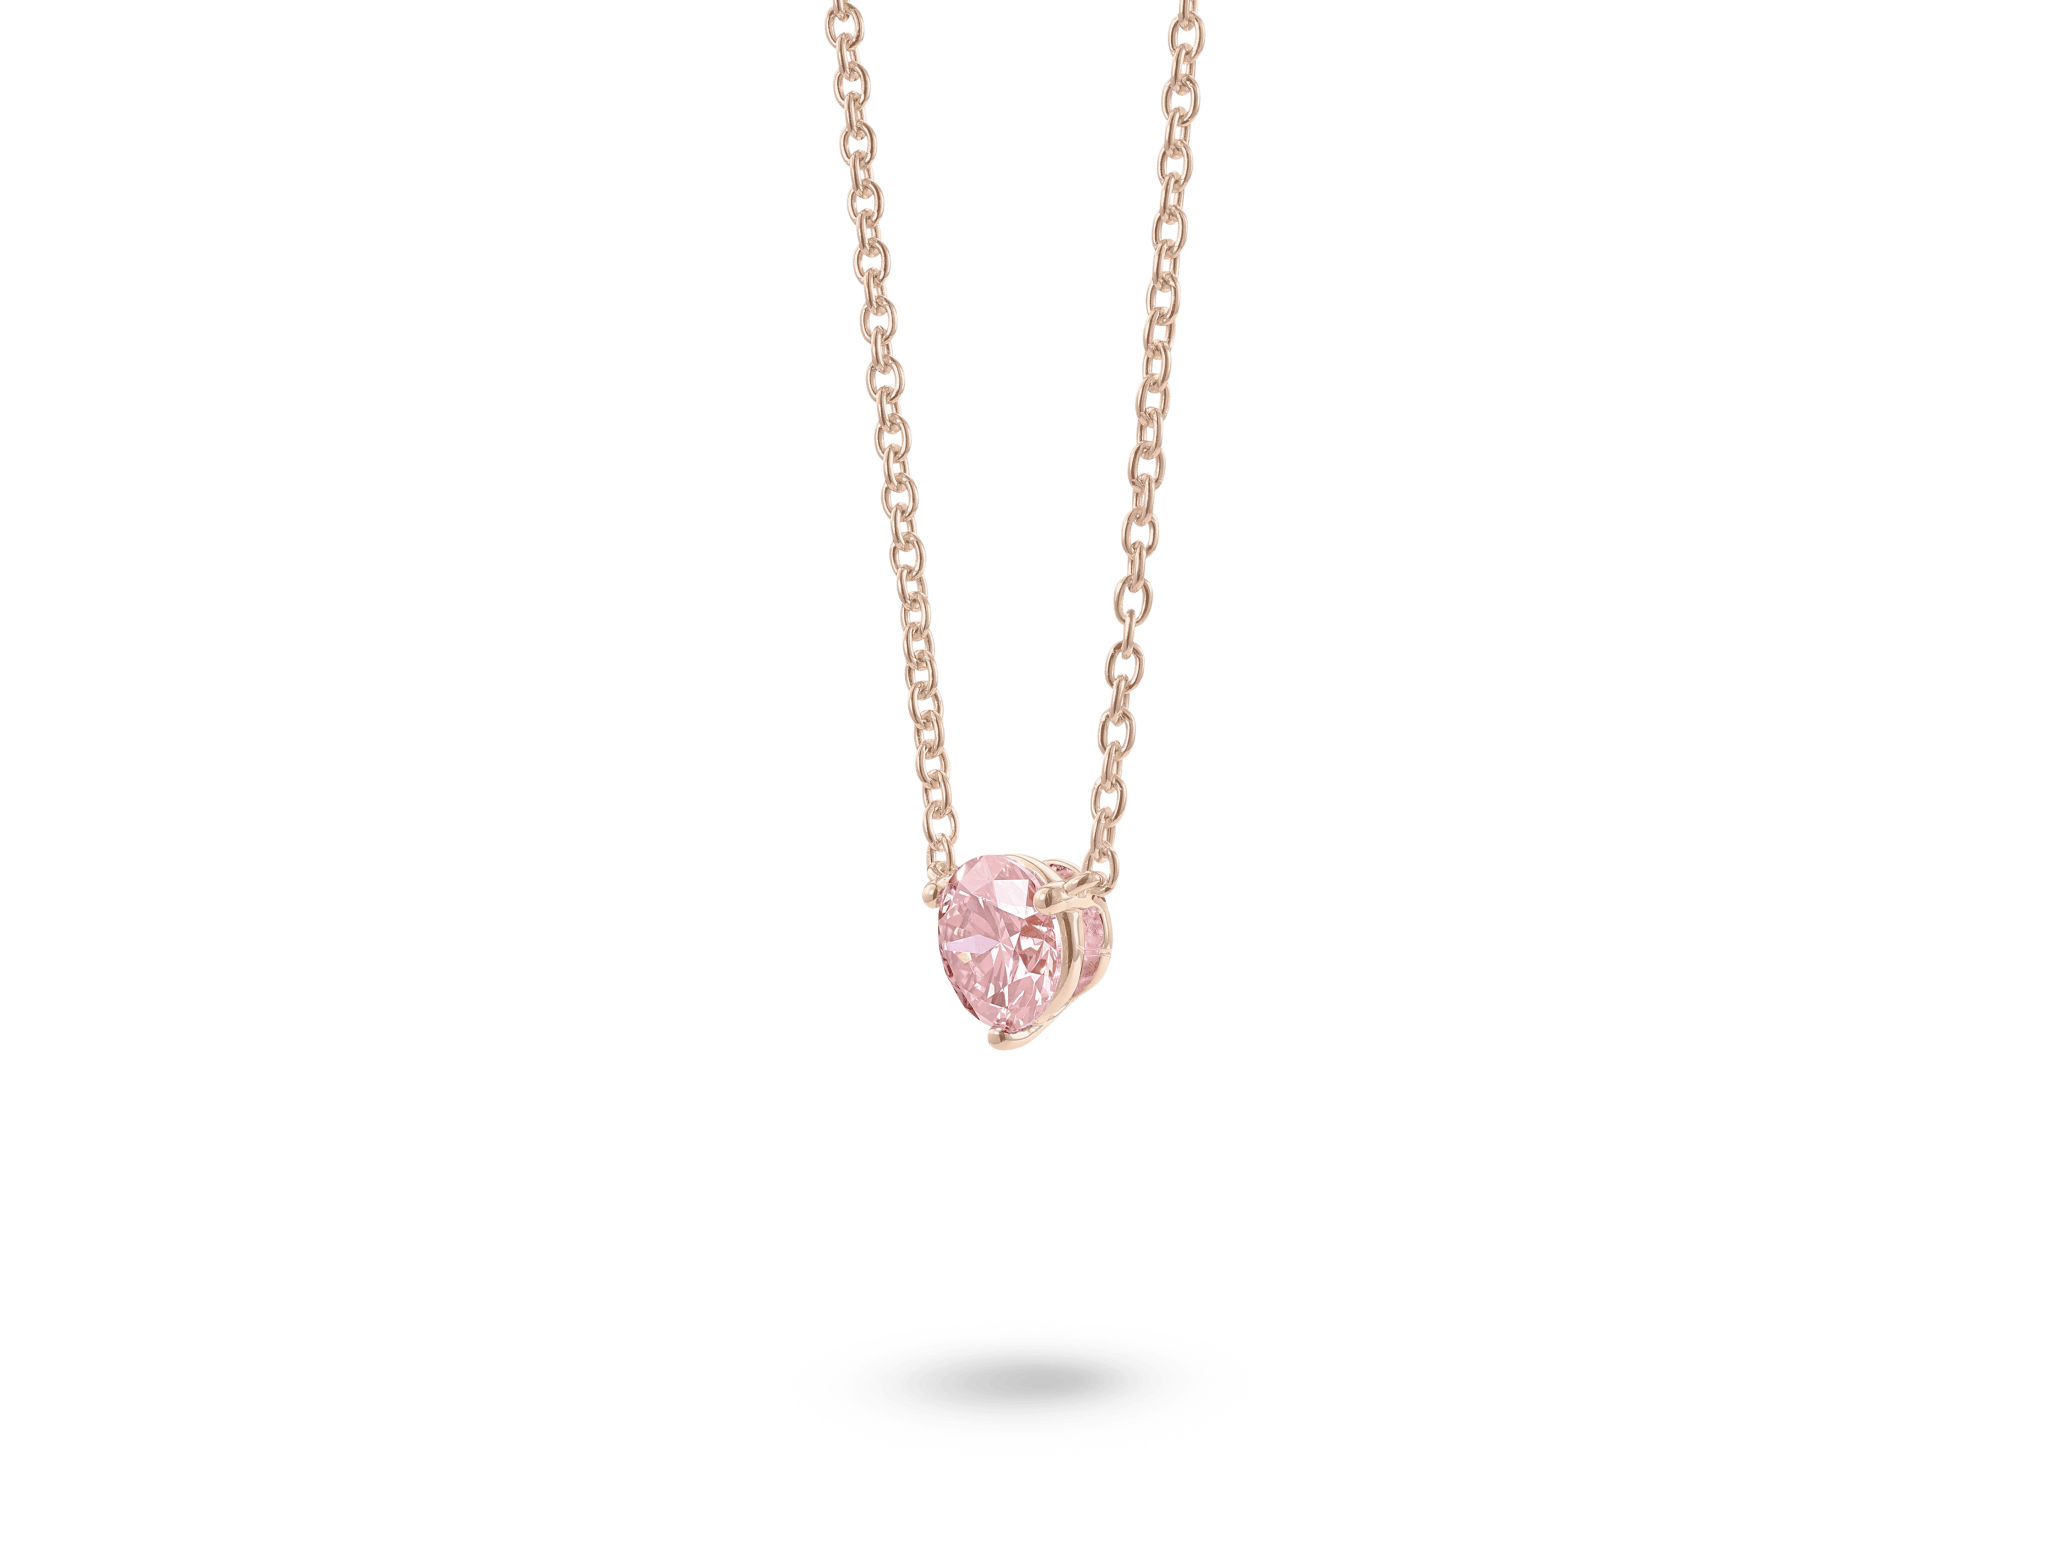 Lab-Grown Diamond 1ct. Round Brilliant Solitaire 14k Gold Pendant | Pink - #Lightbox Jewelry#